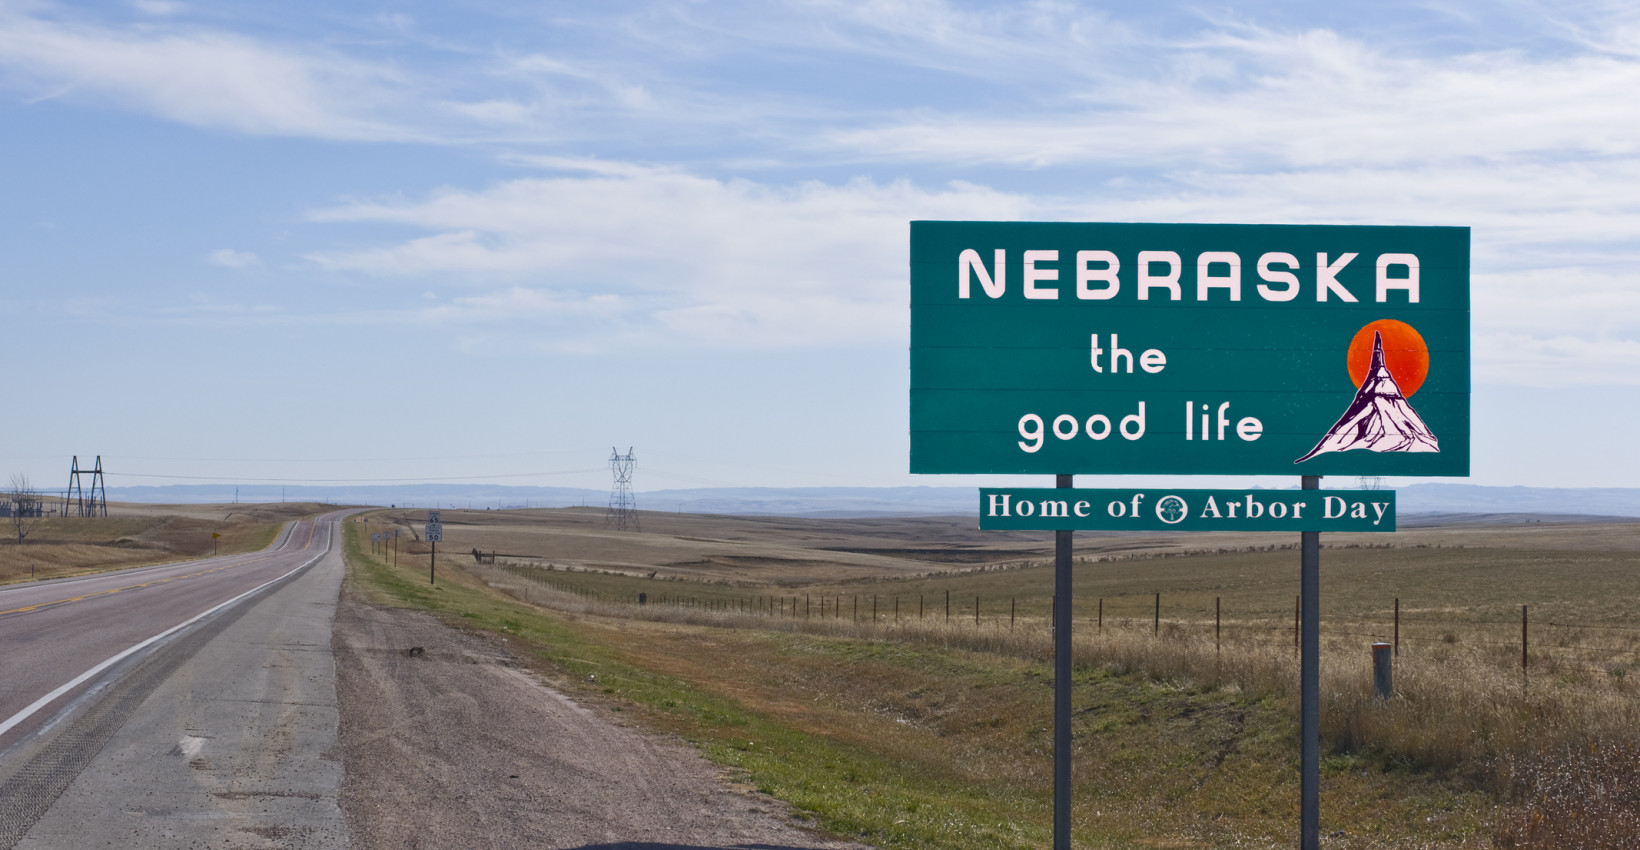 Nebraska, The Good Life